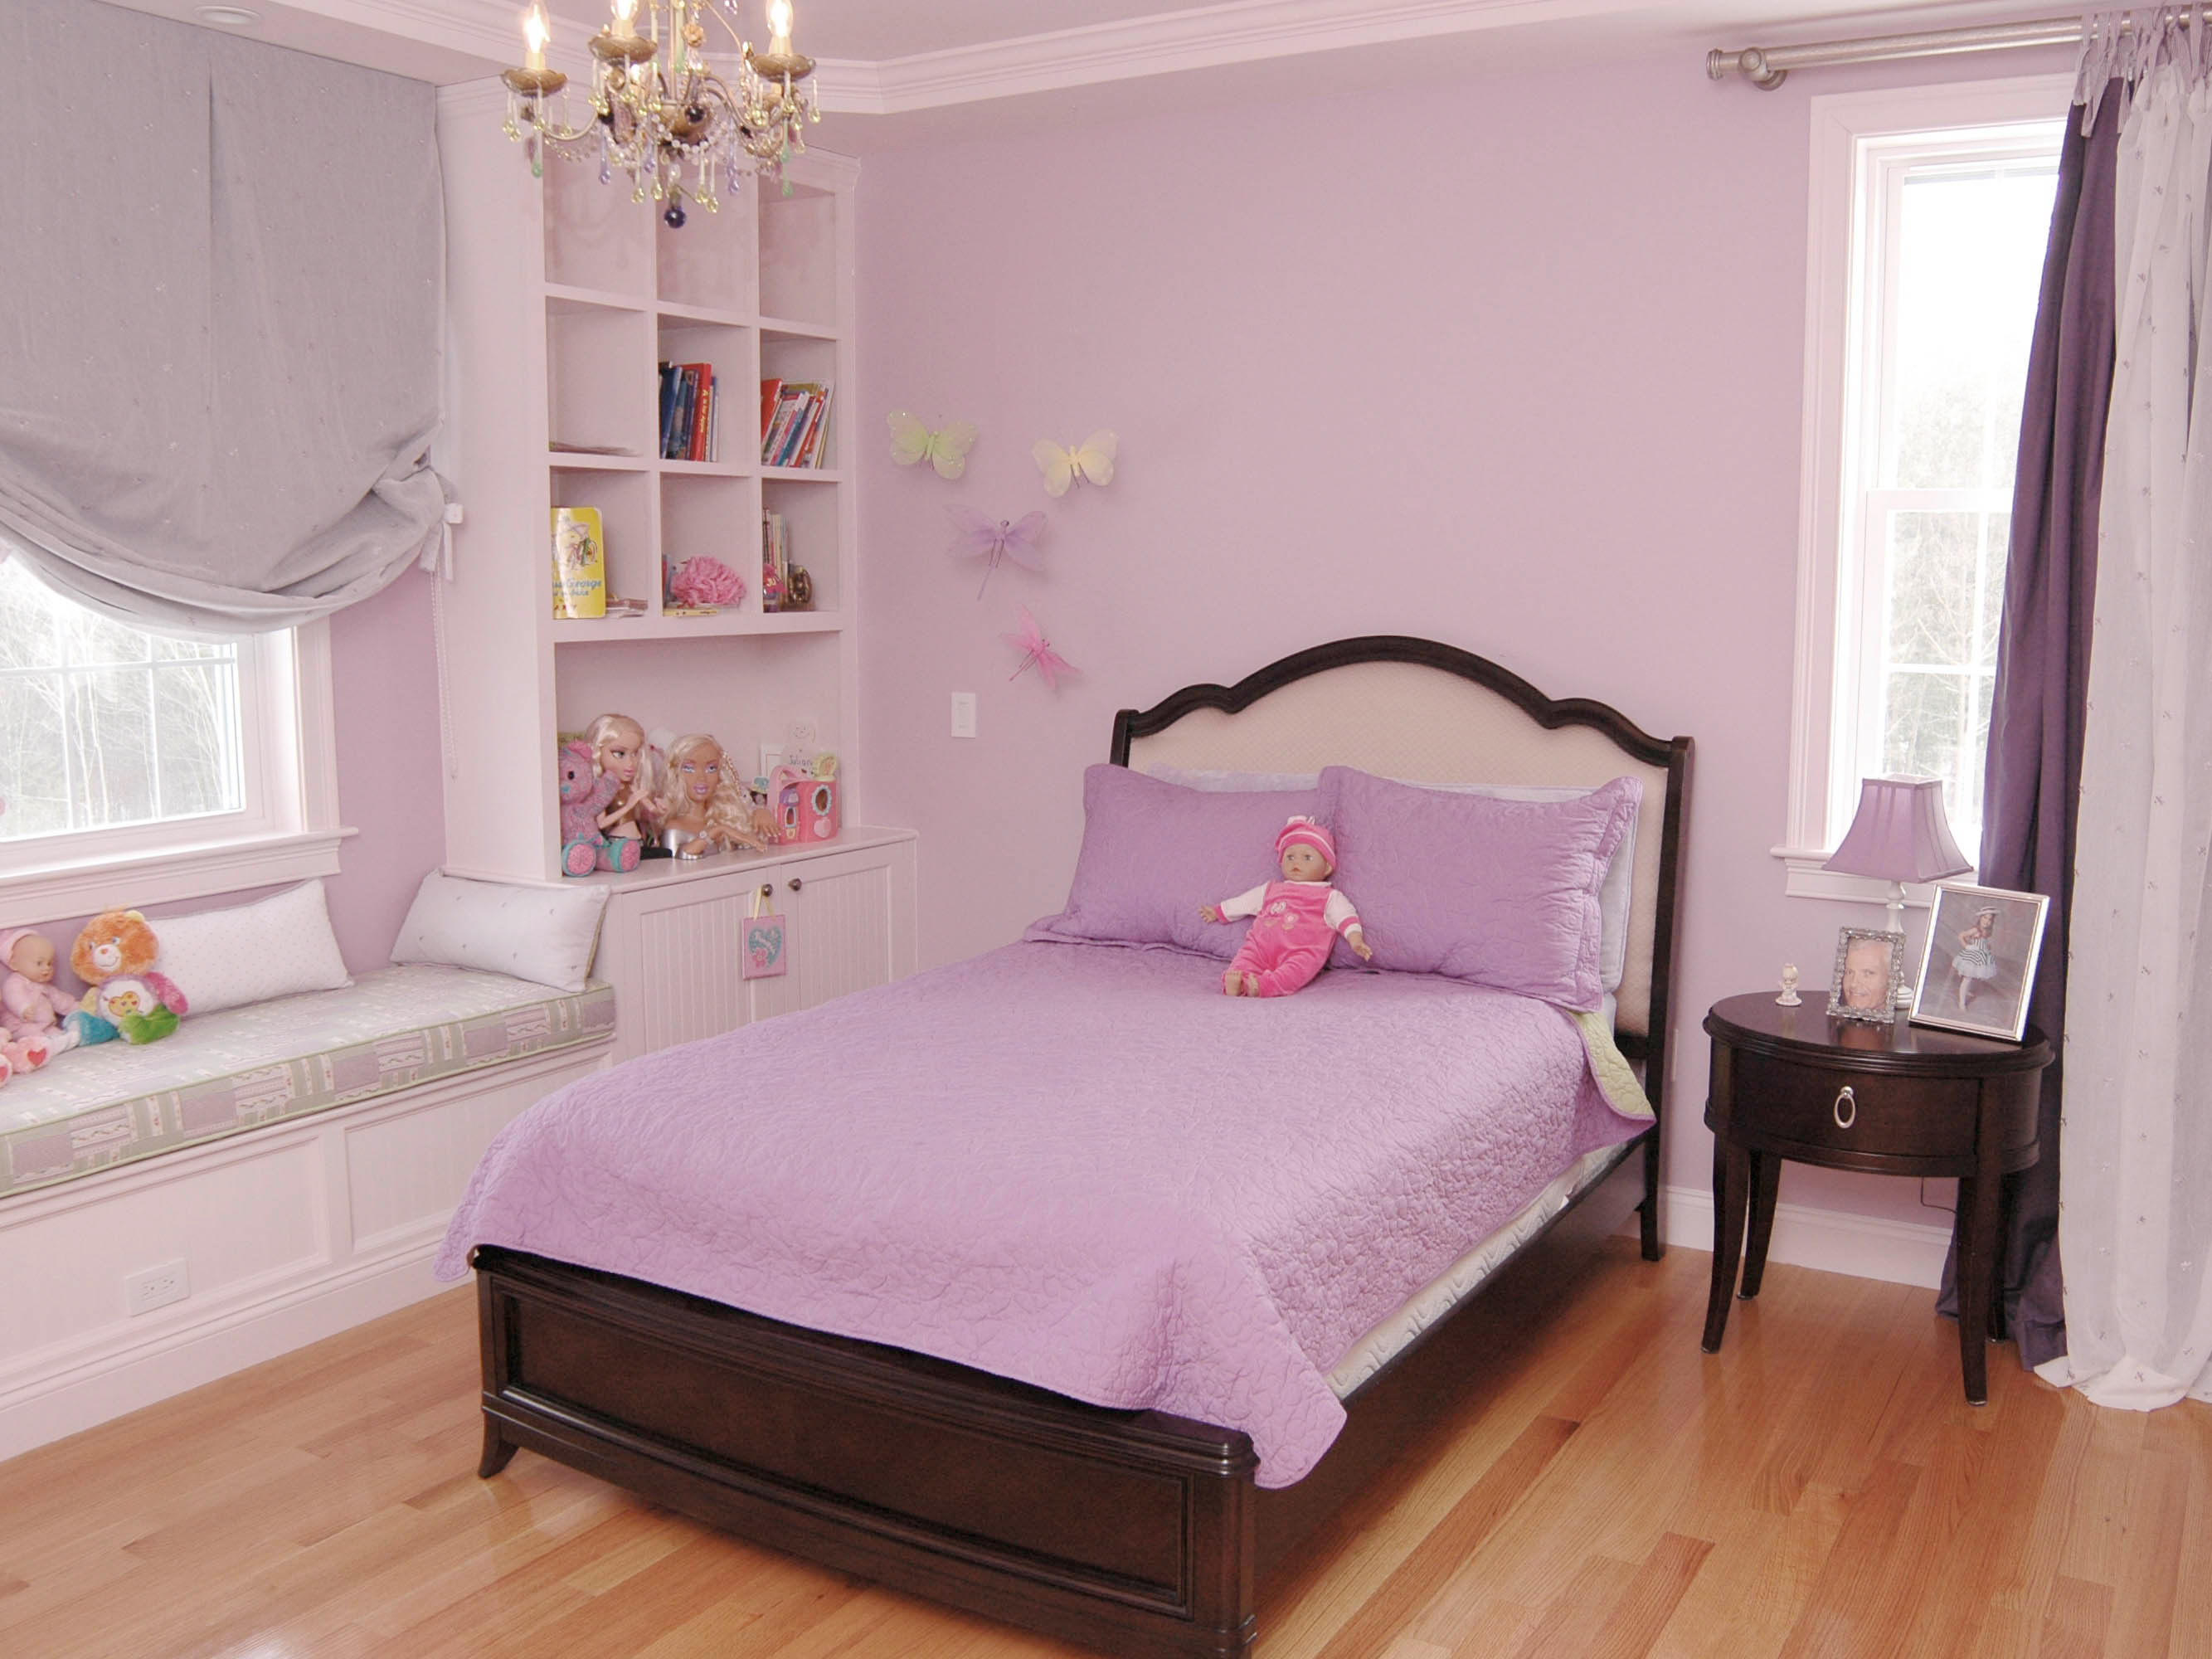 Комната в сиренево-розовых тонах для девочки